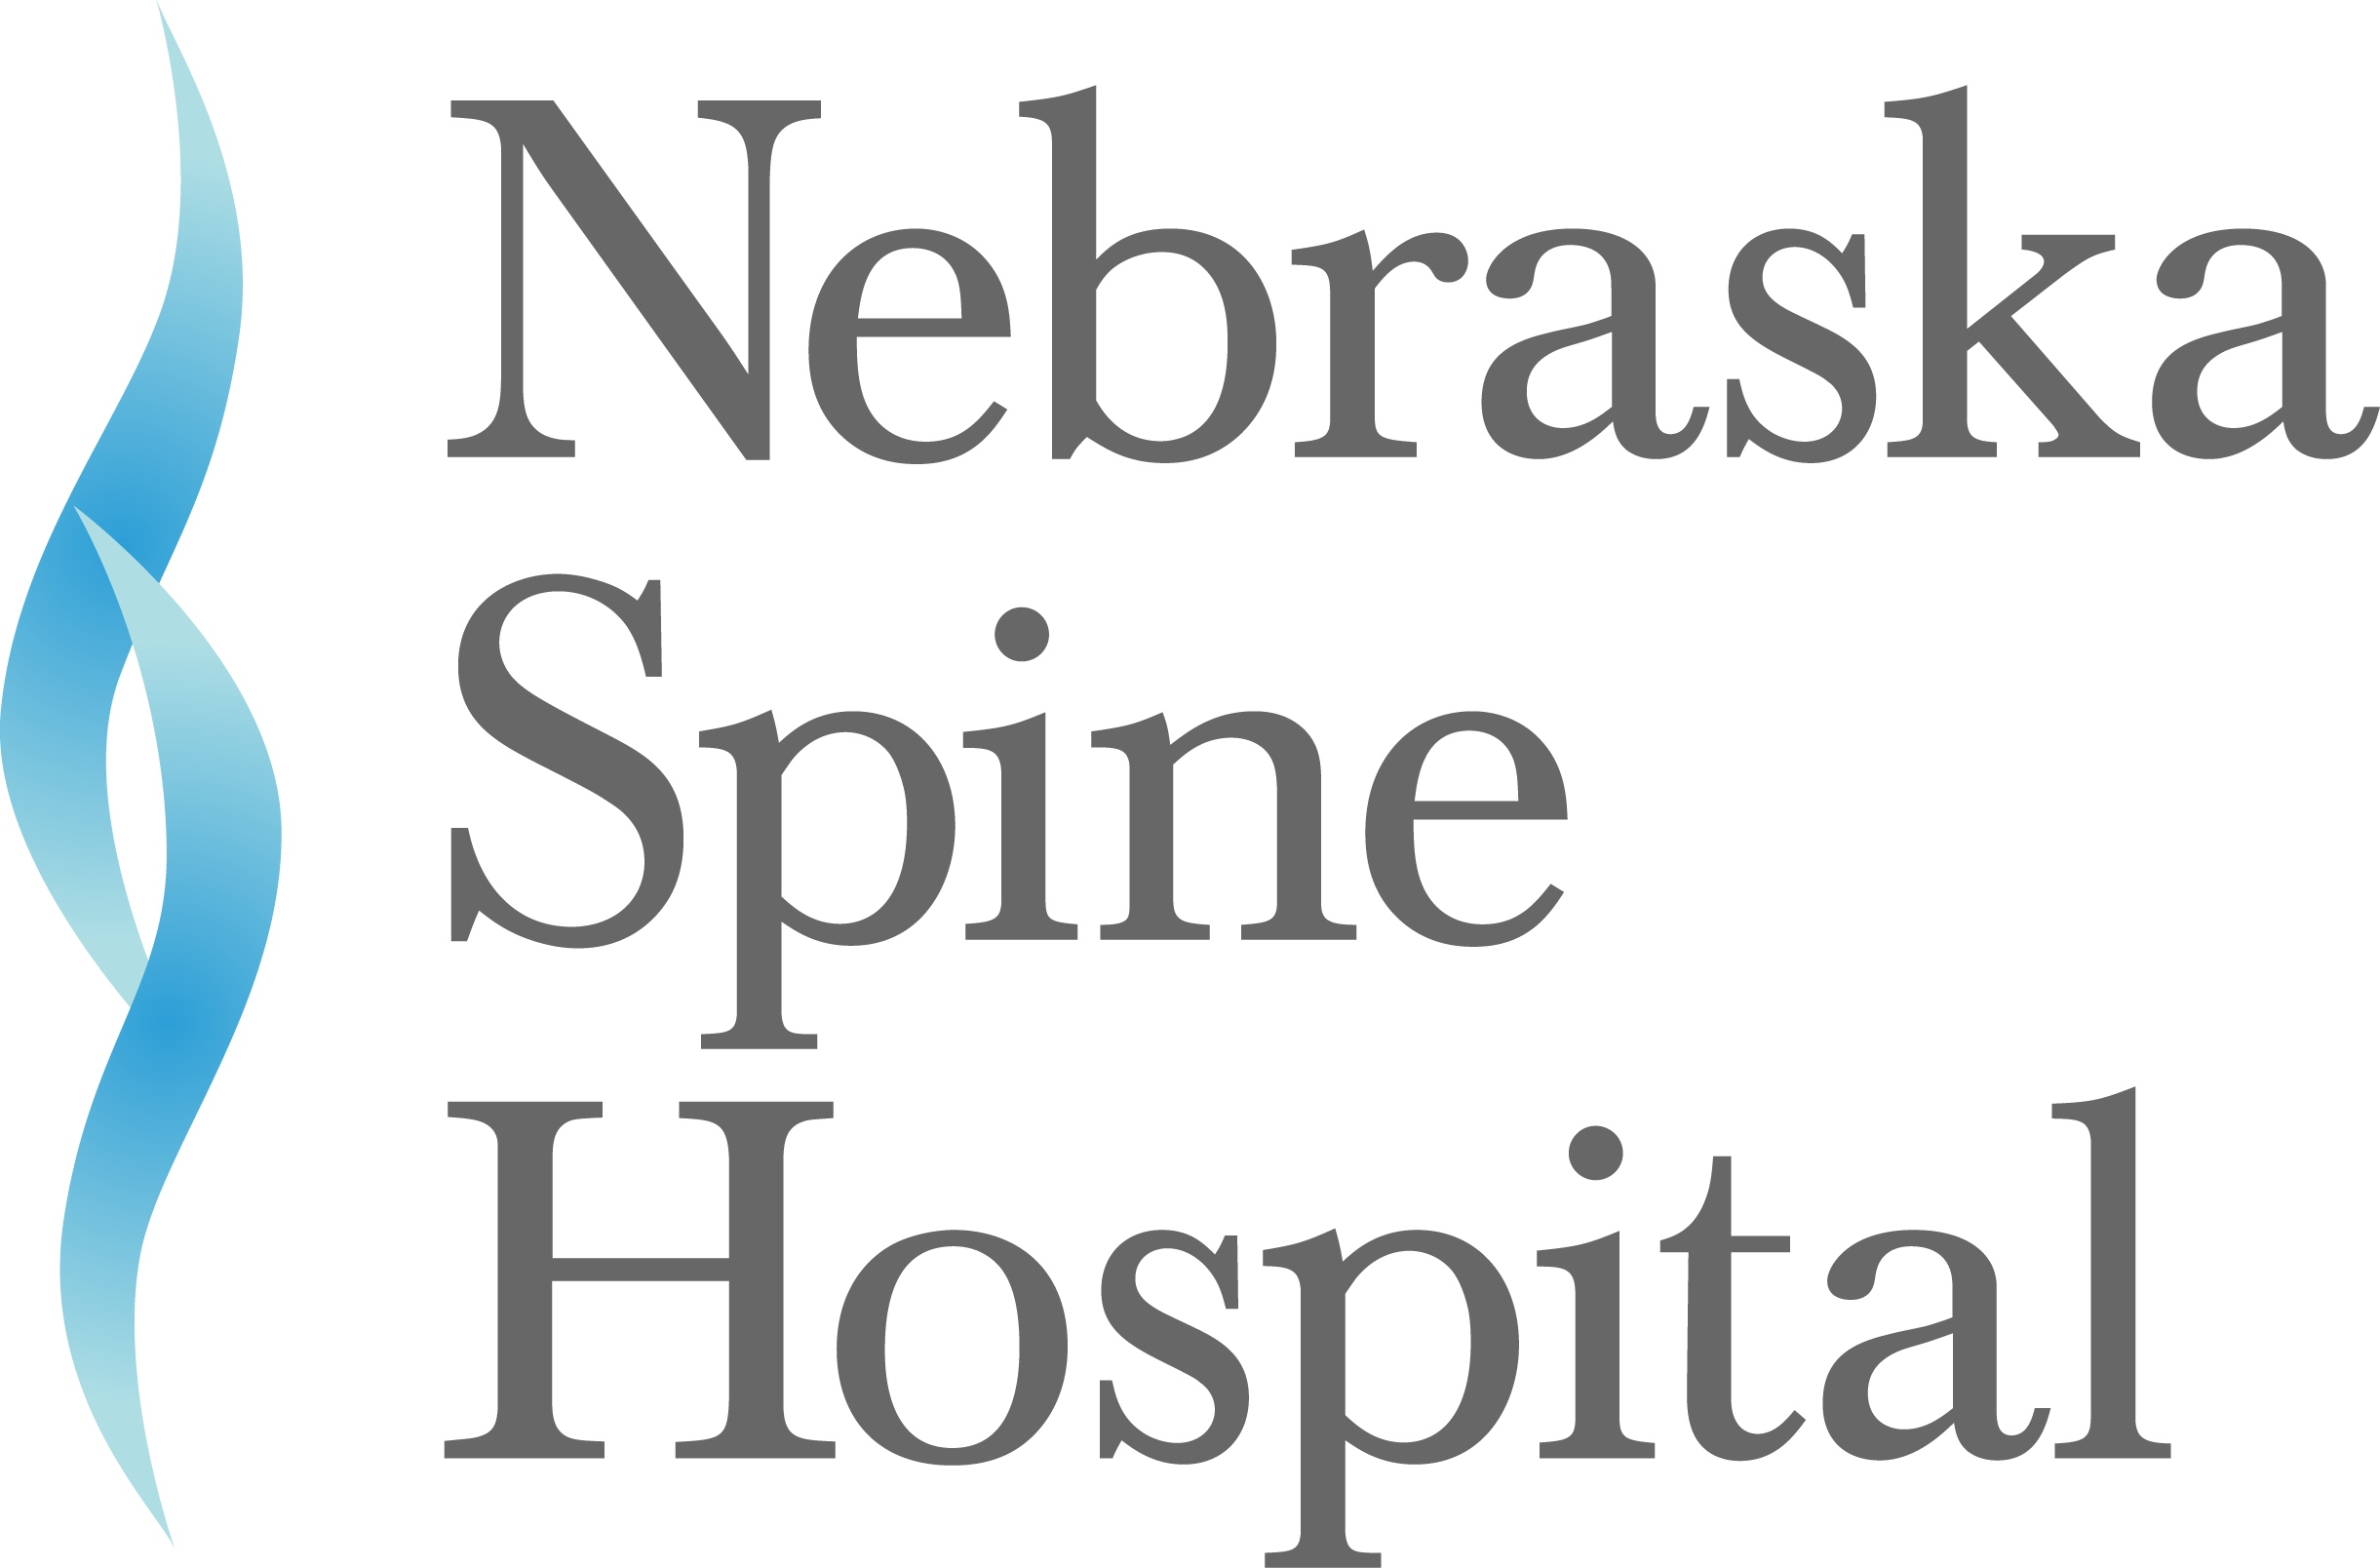 What Does A Spinal Cord Stimulator Do? - Nebraska Spine Hospital